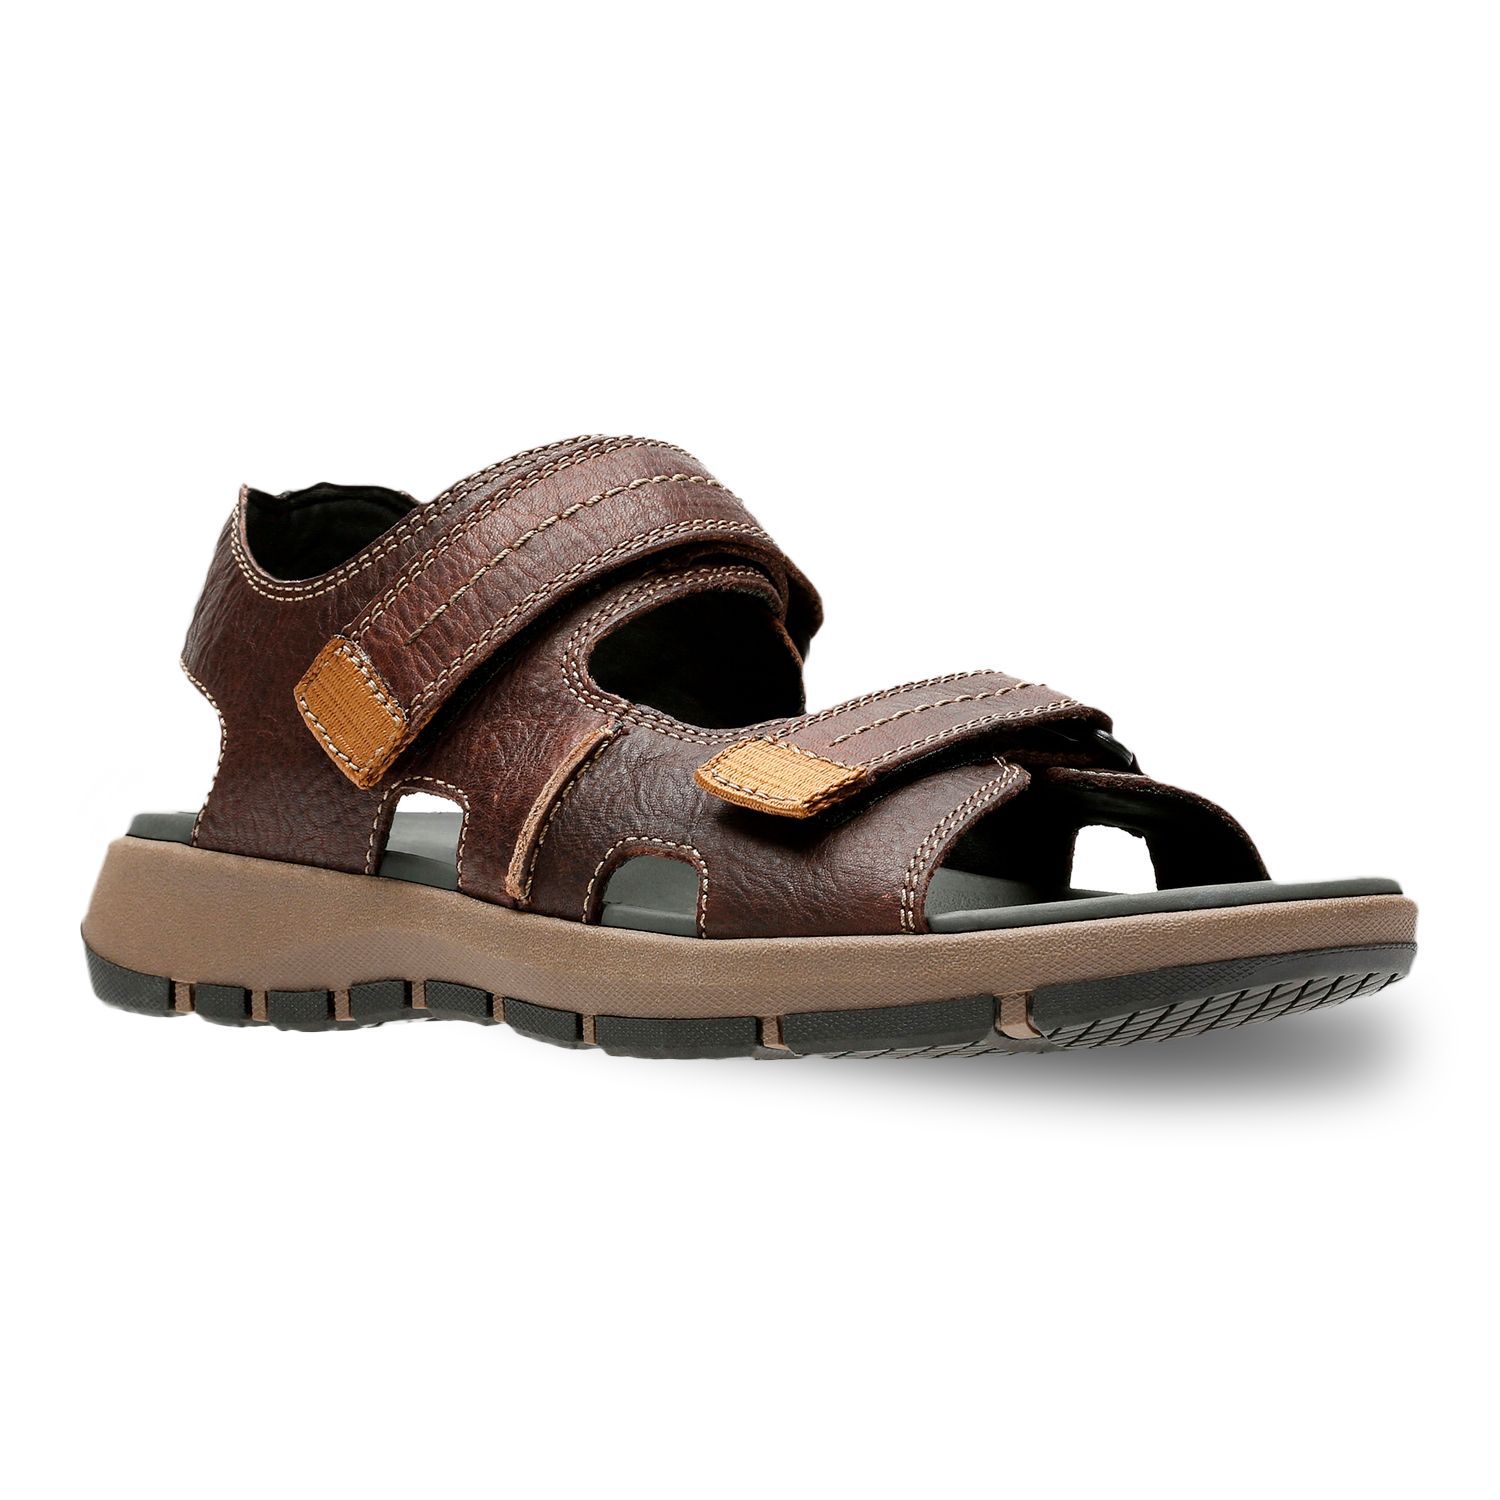 Clarks® Brixby Shore Men's Sandals